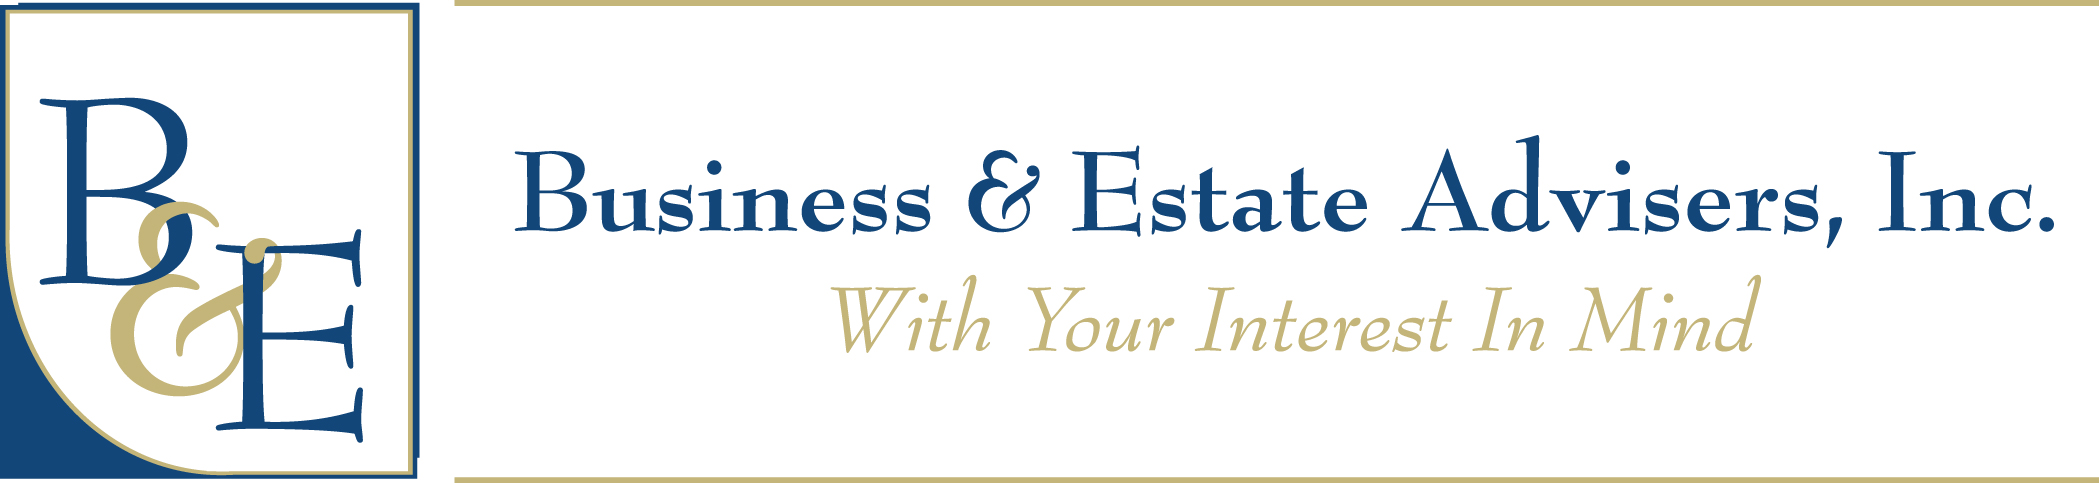 Business & Estate Advisers Logo